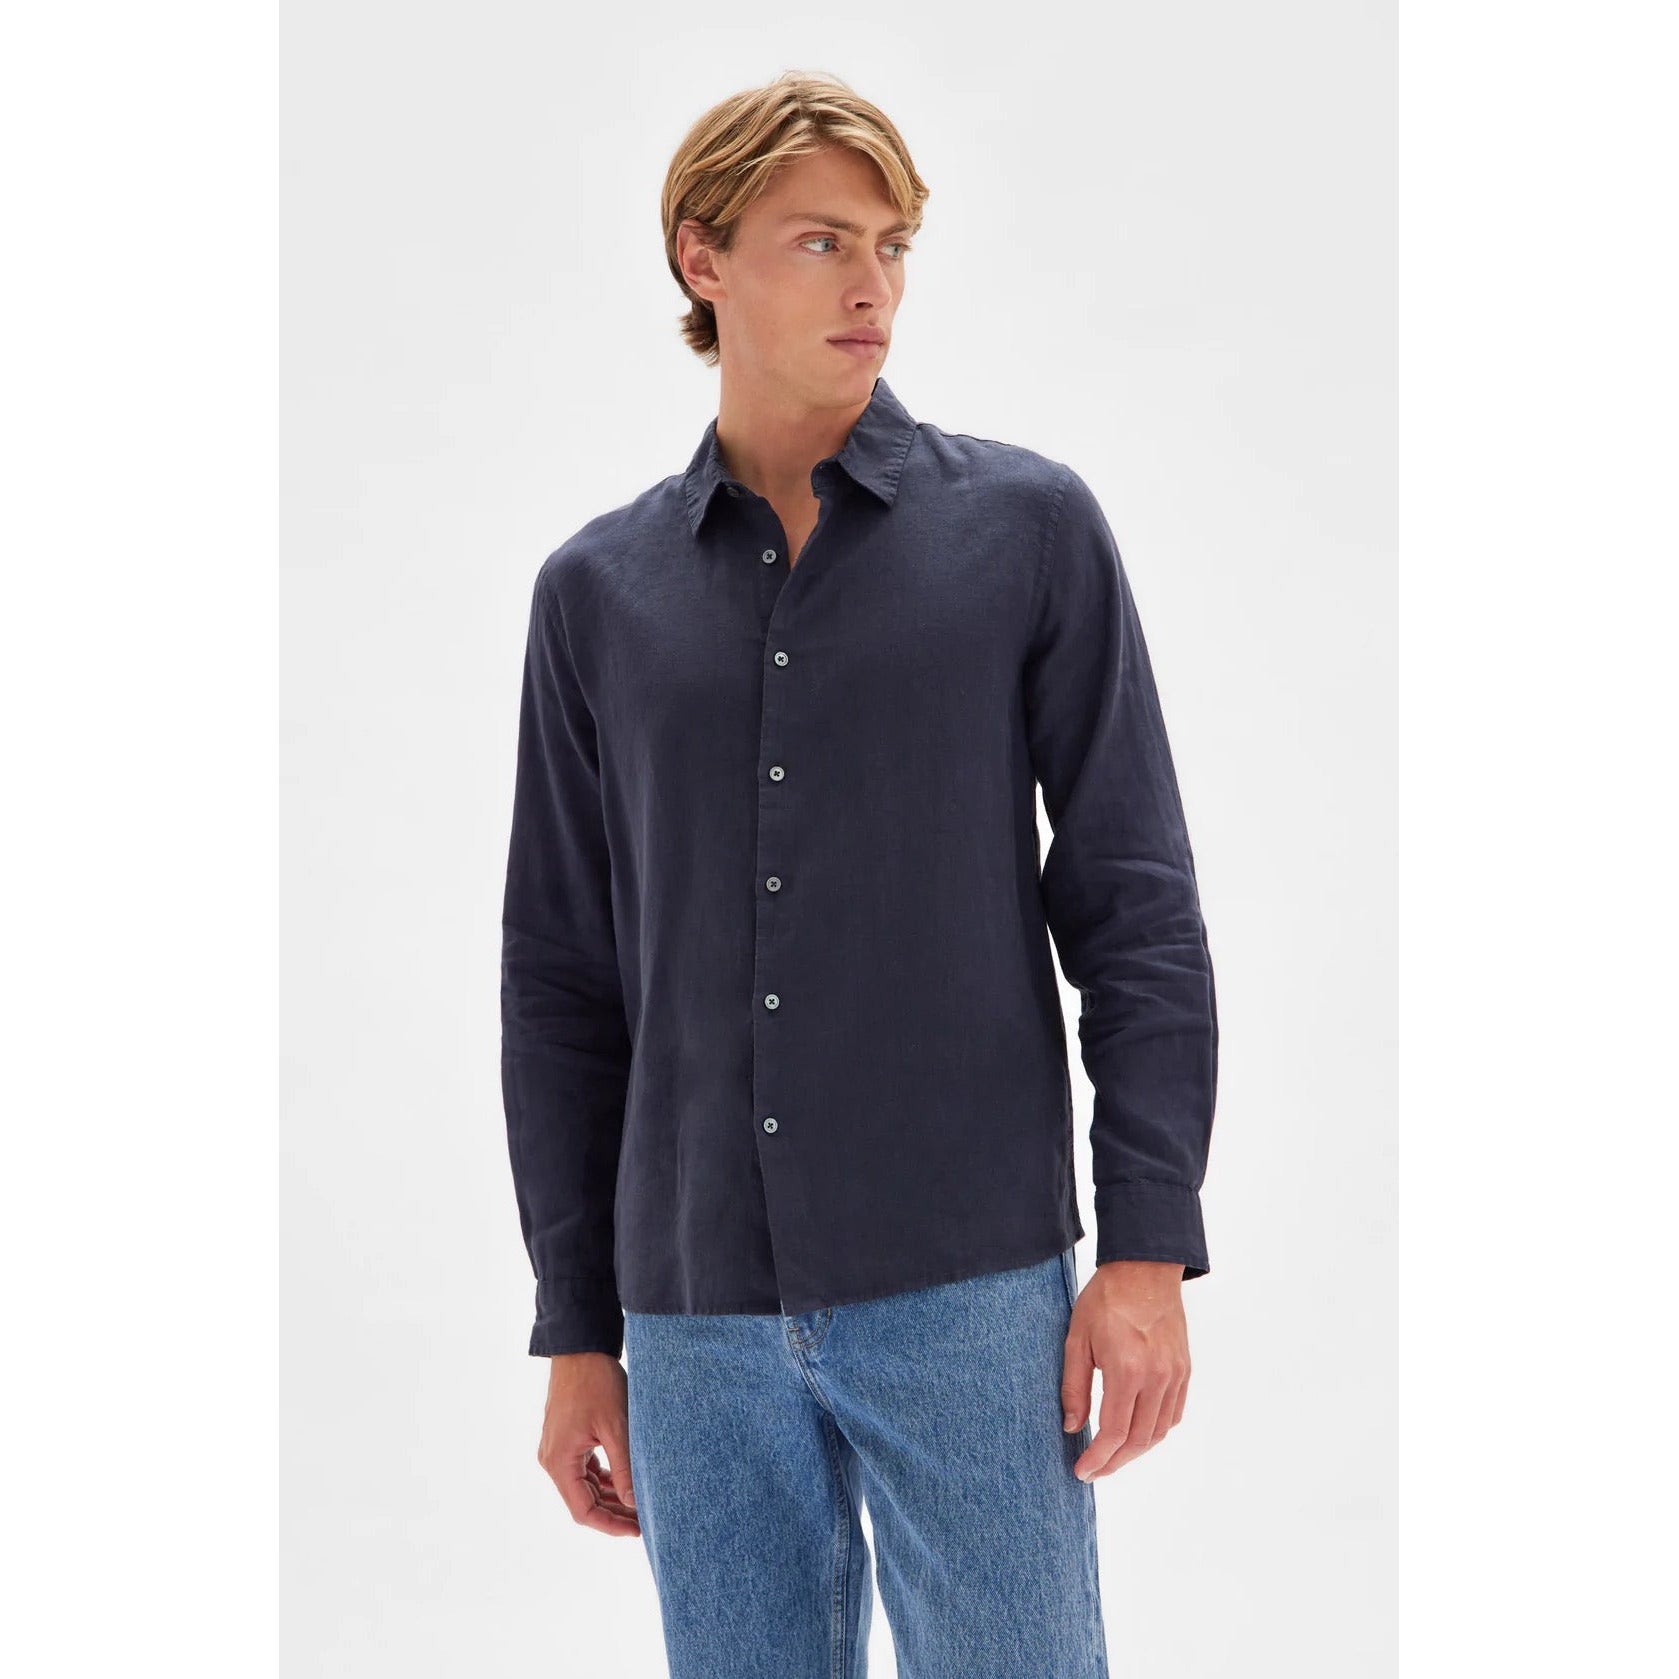 Assembly Label Men's Casual Long Sleeve Linen Shirt